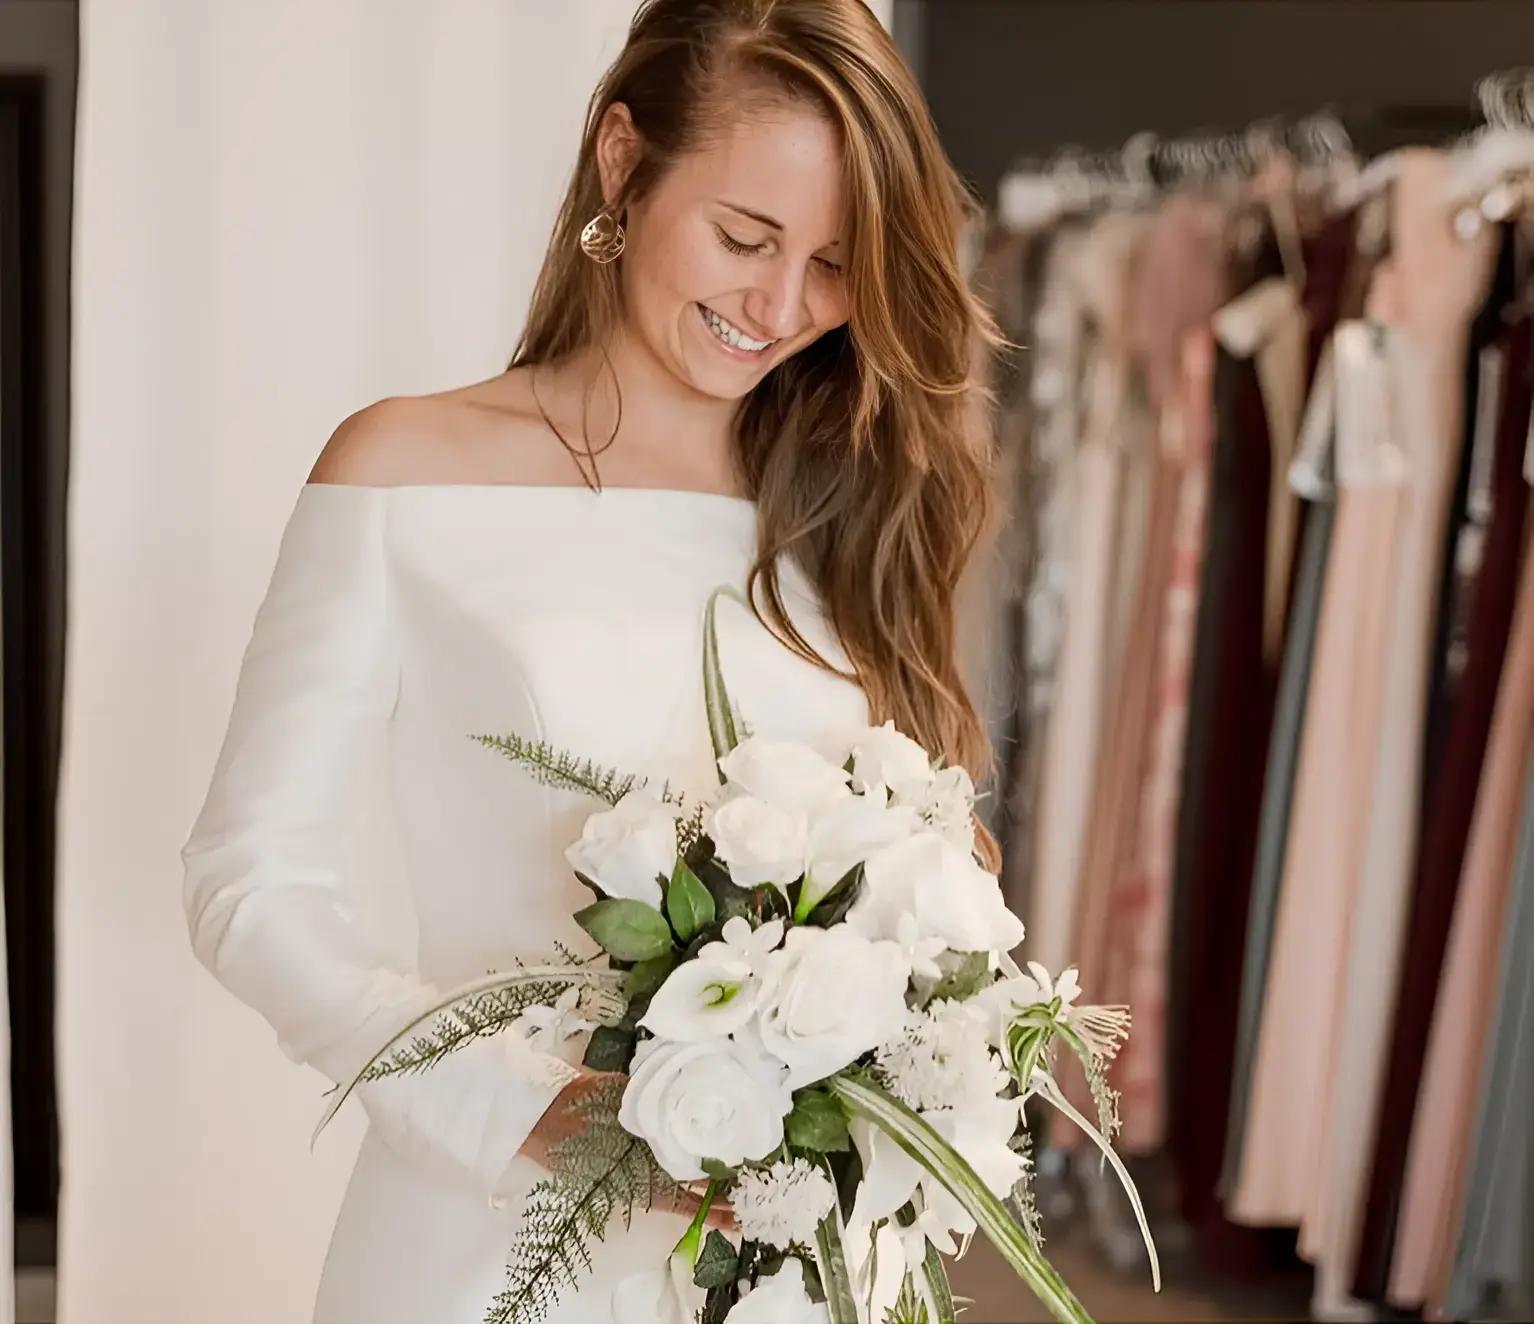 Model wearing a white bridal gown - Desktop Image